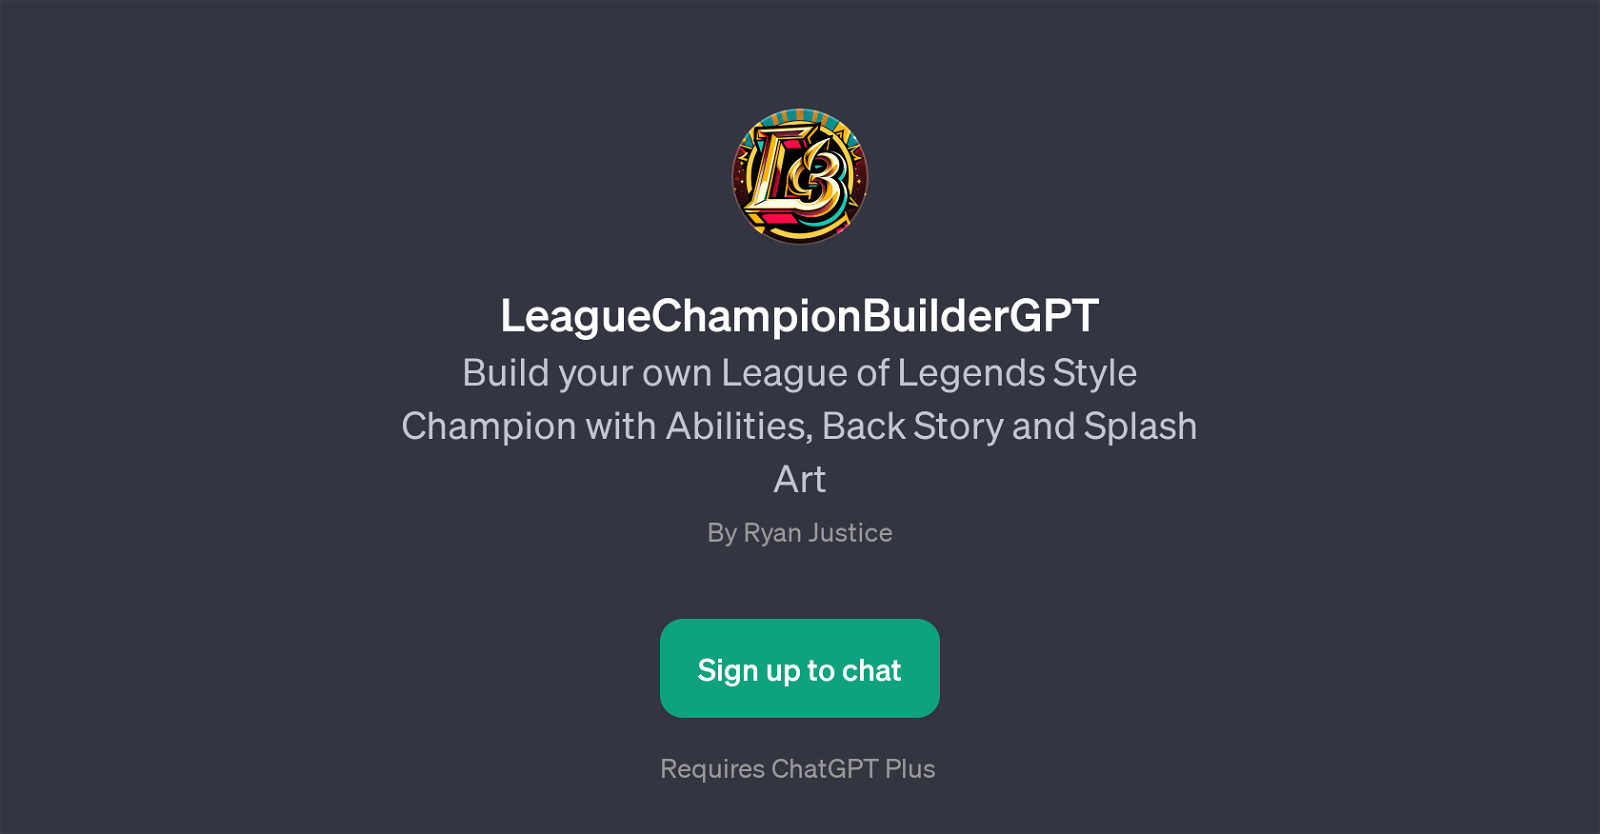 LeagueChampionBuilderGPT website